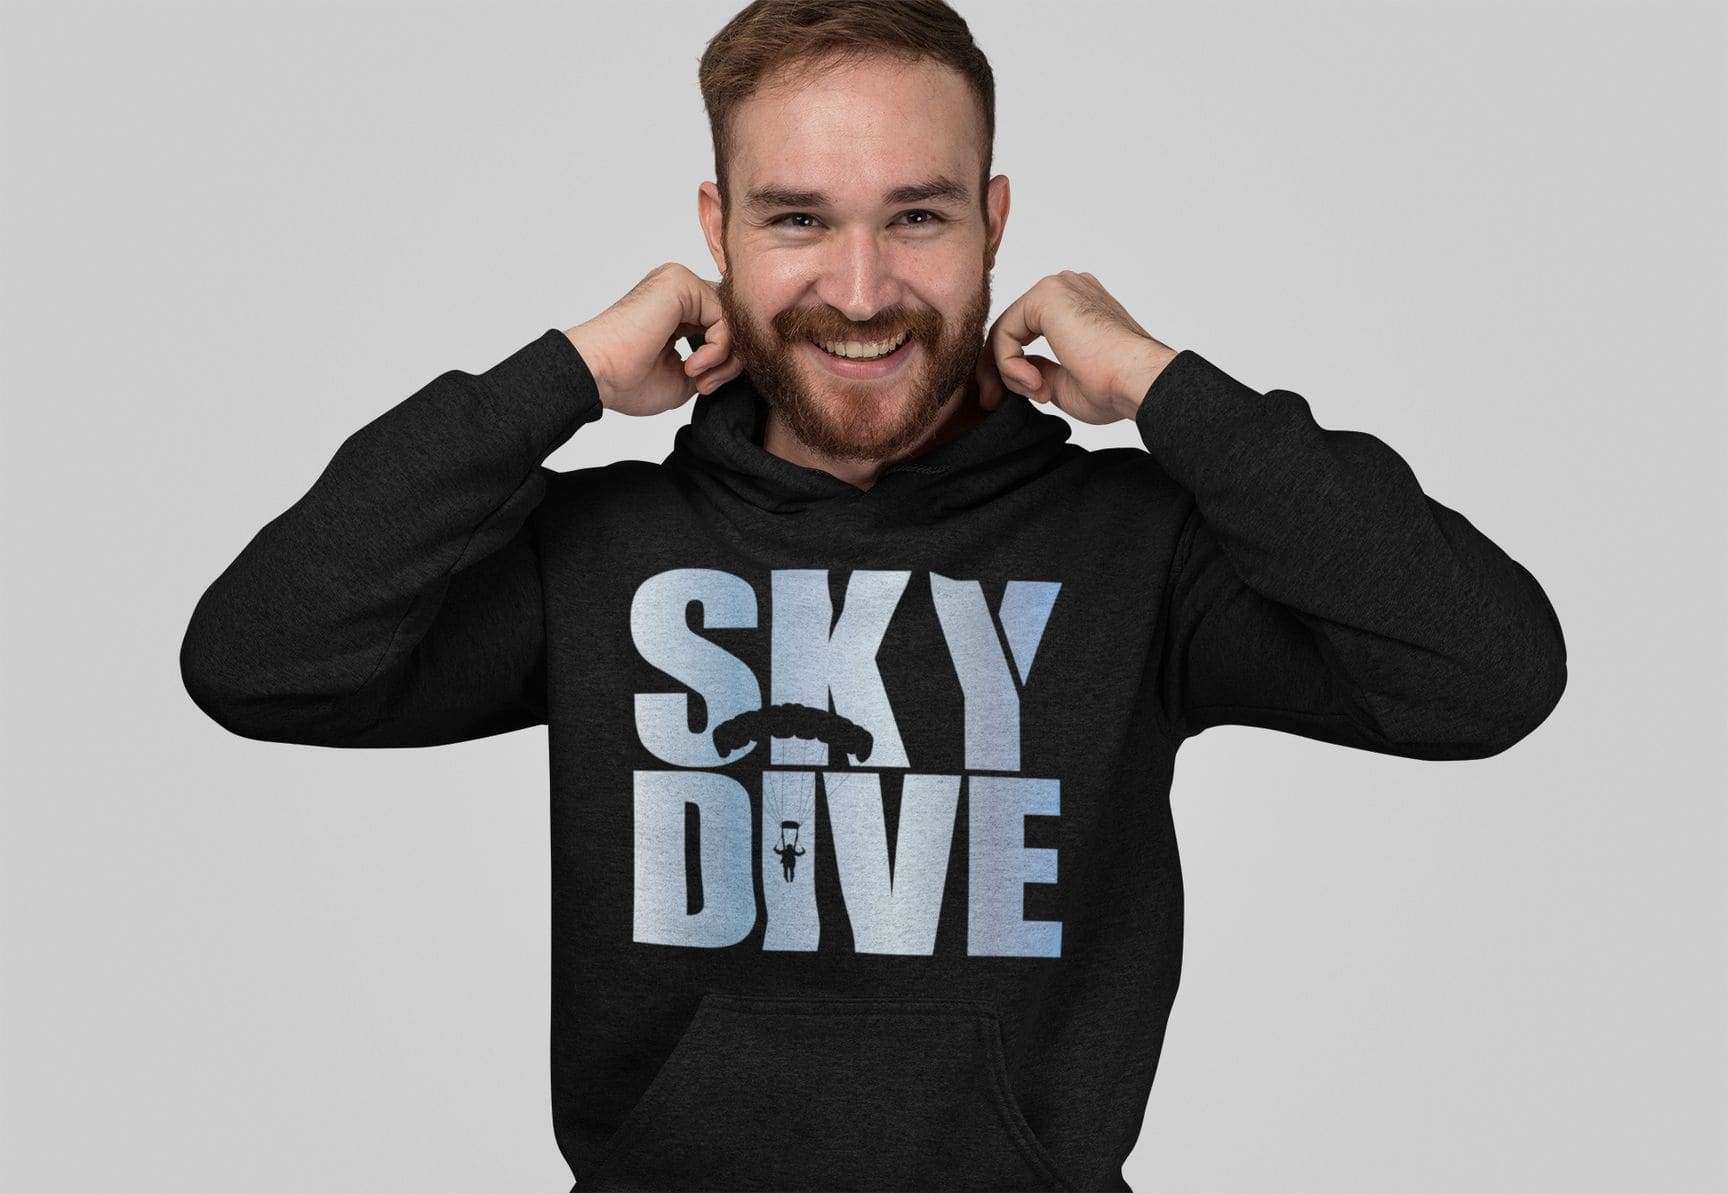 Sky dive - Gift for sky diver, sky diving risky sport